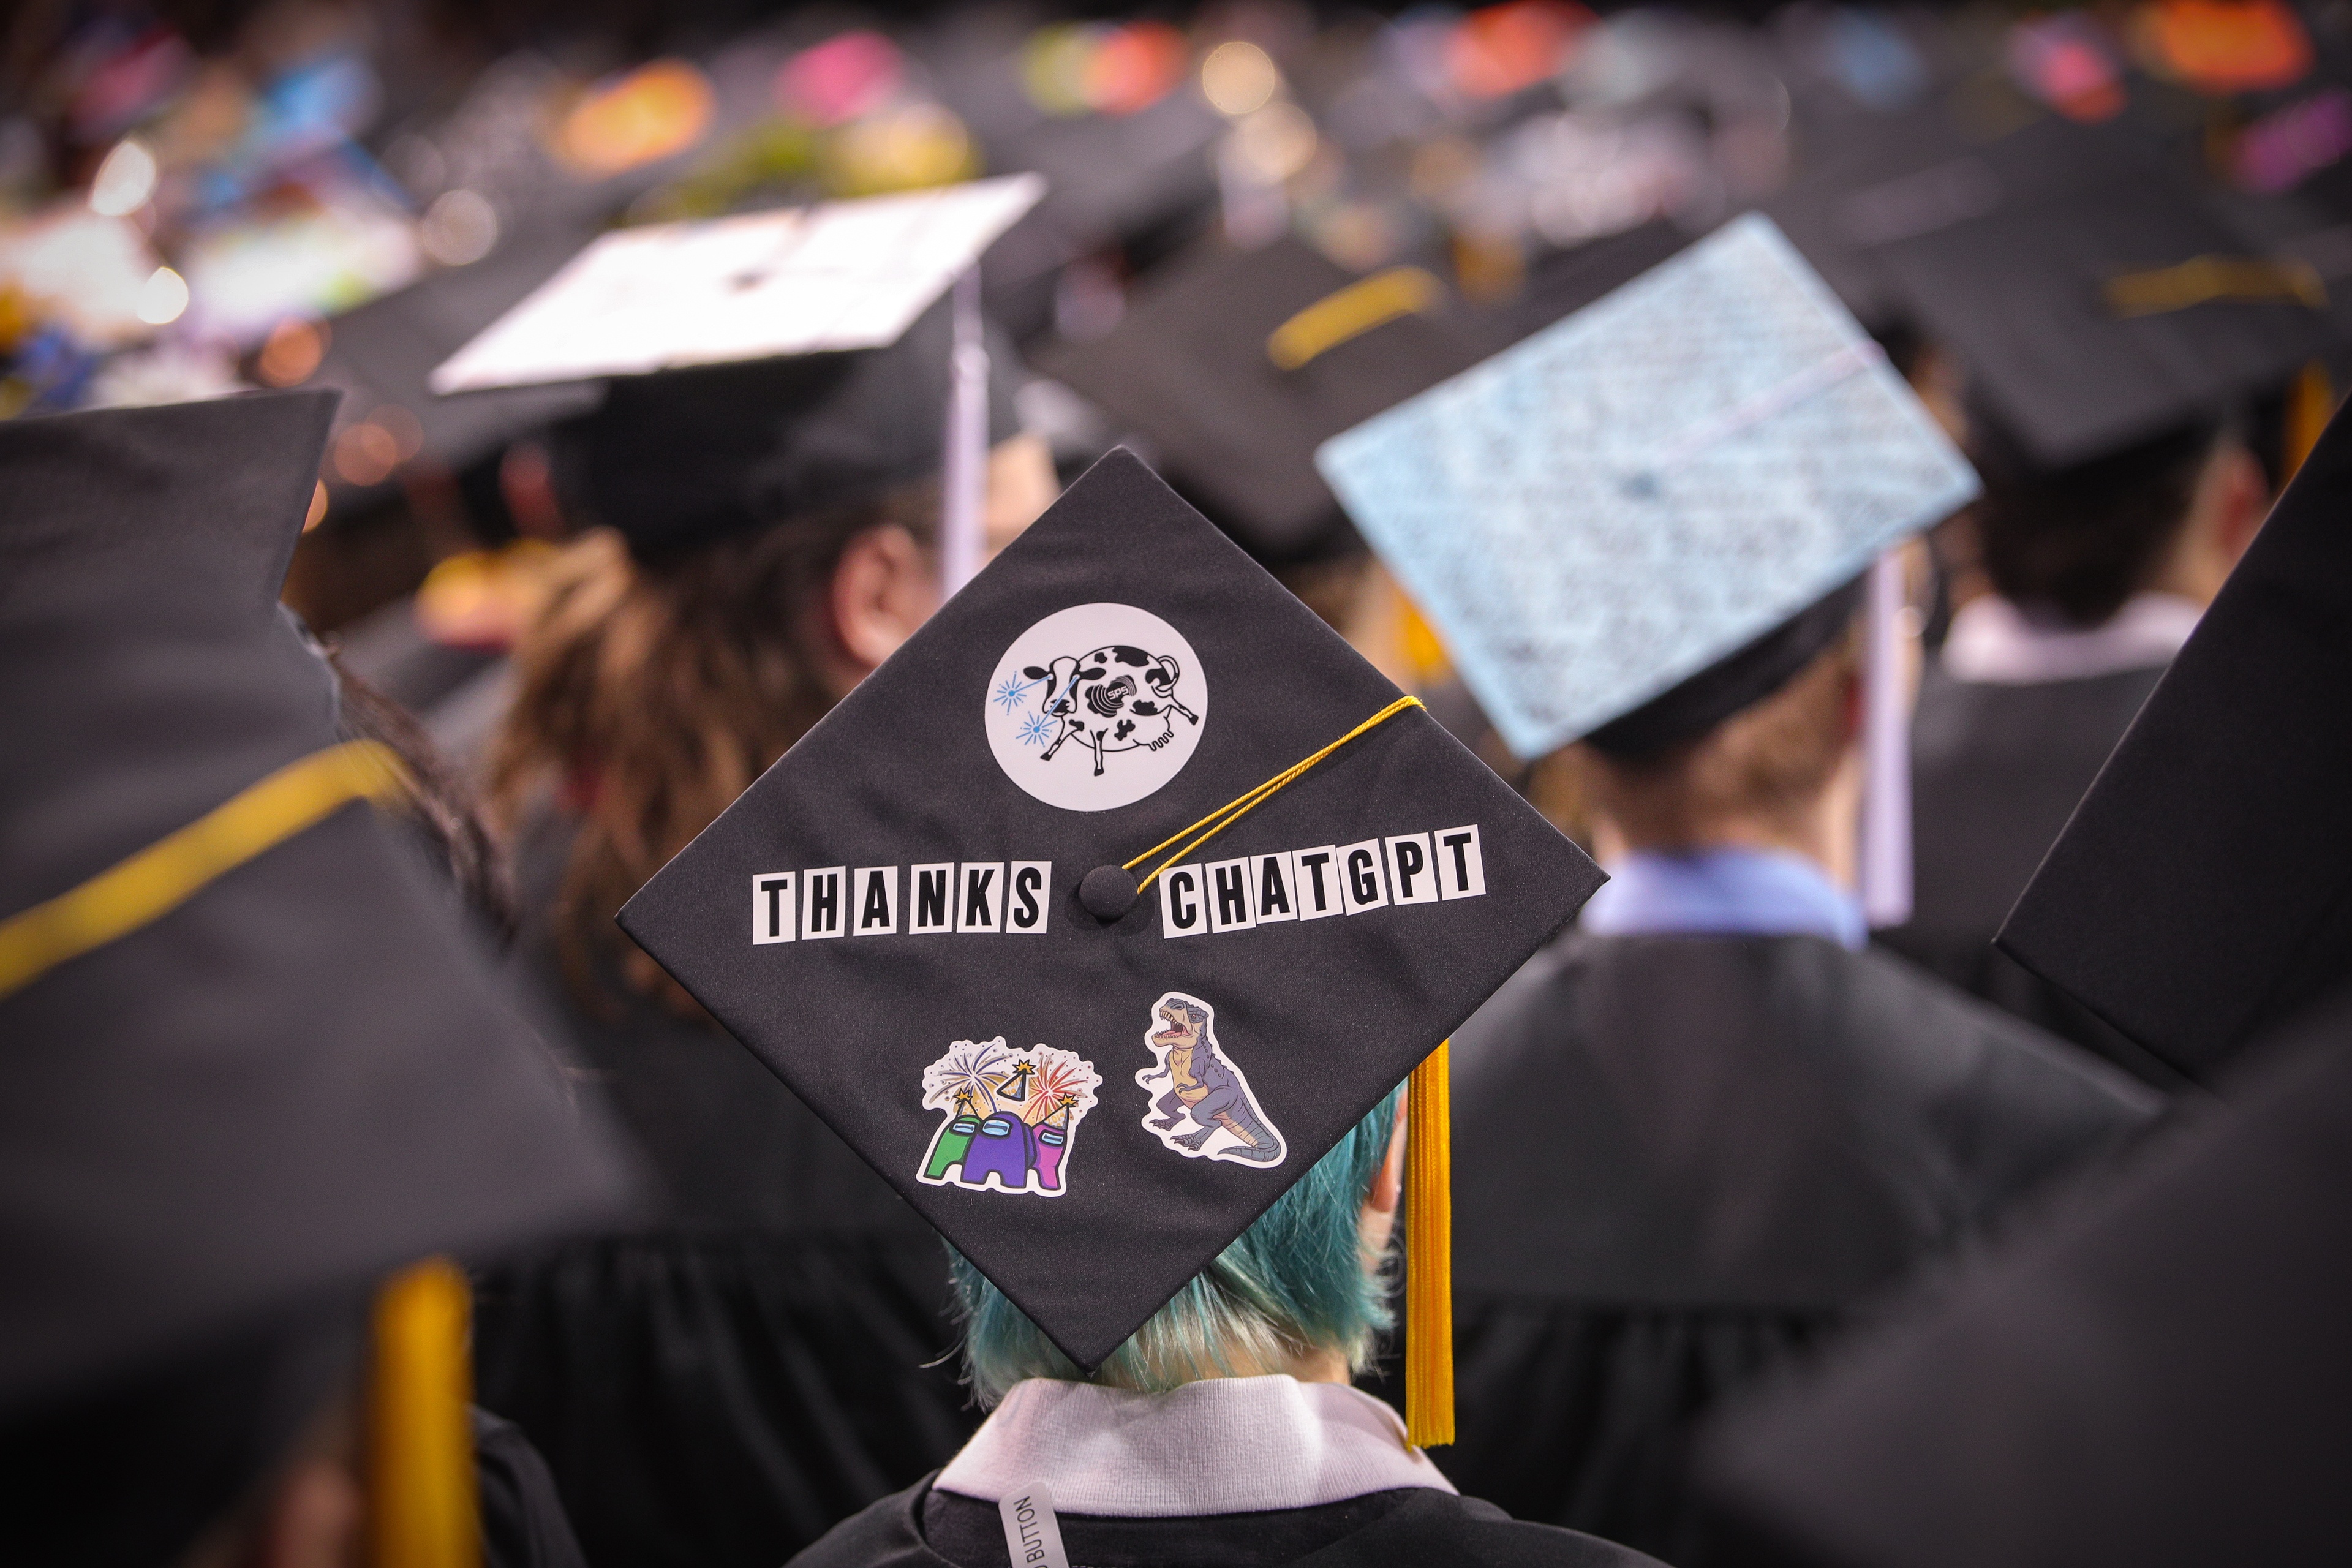 Graduation cap says “Thanks ChatGPT” 